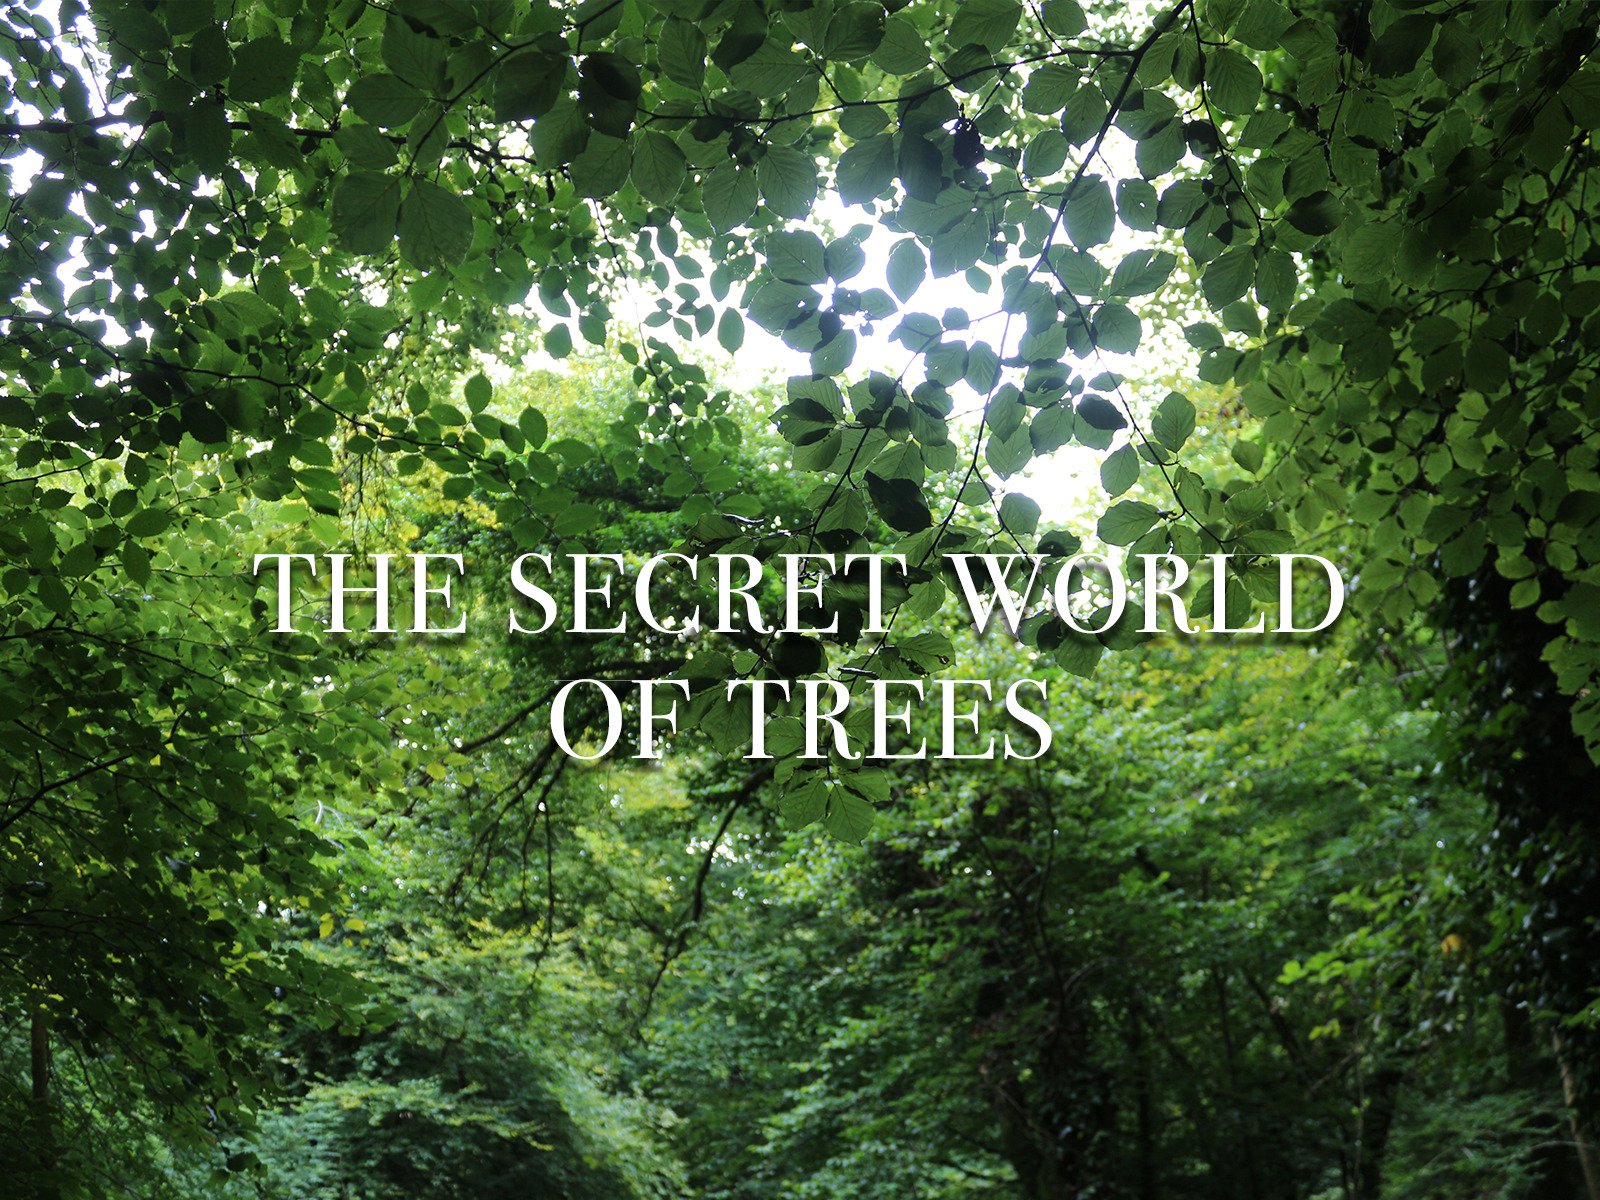 The Secret World of Trees